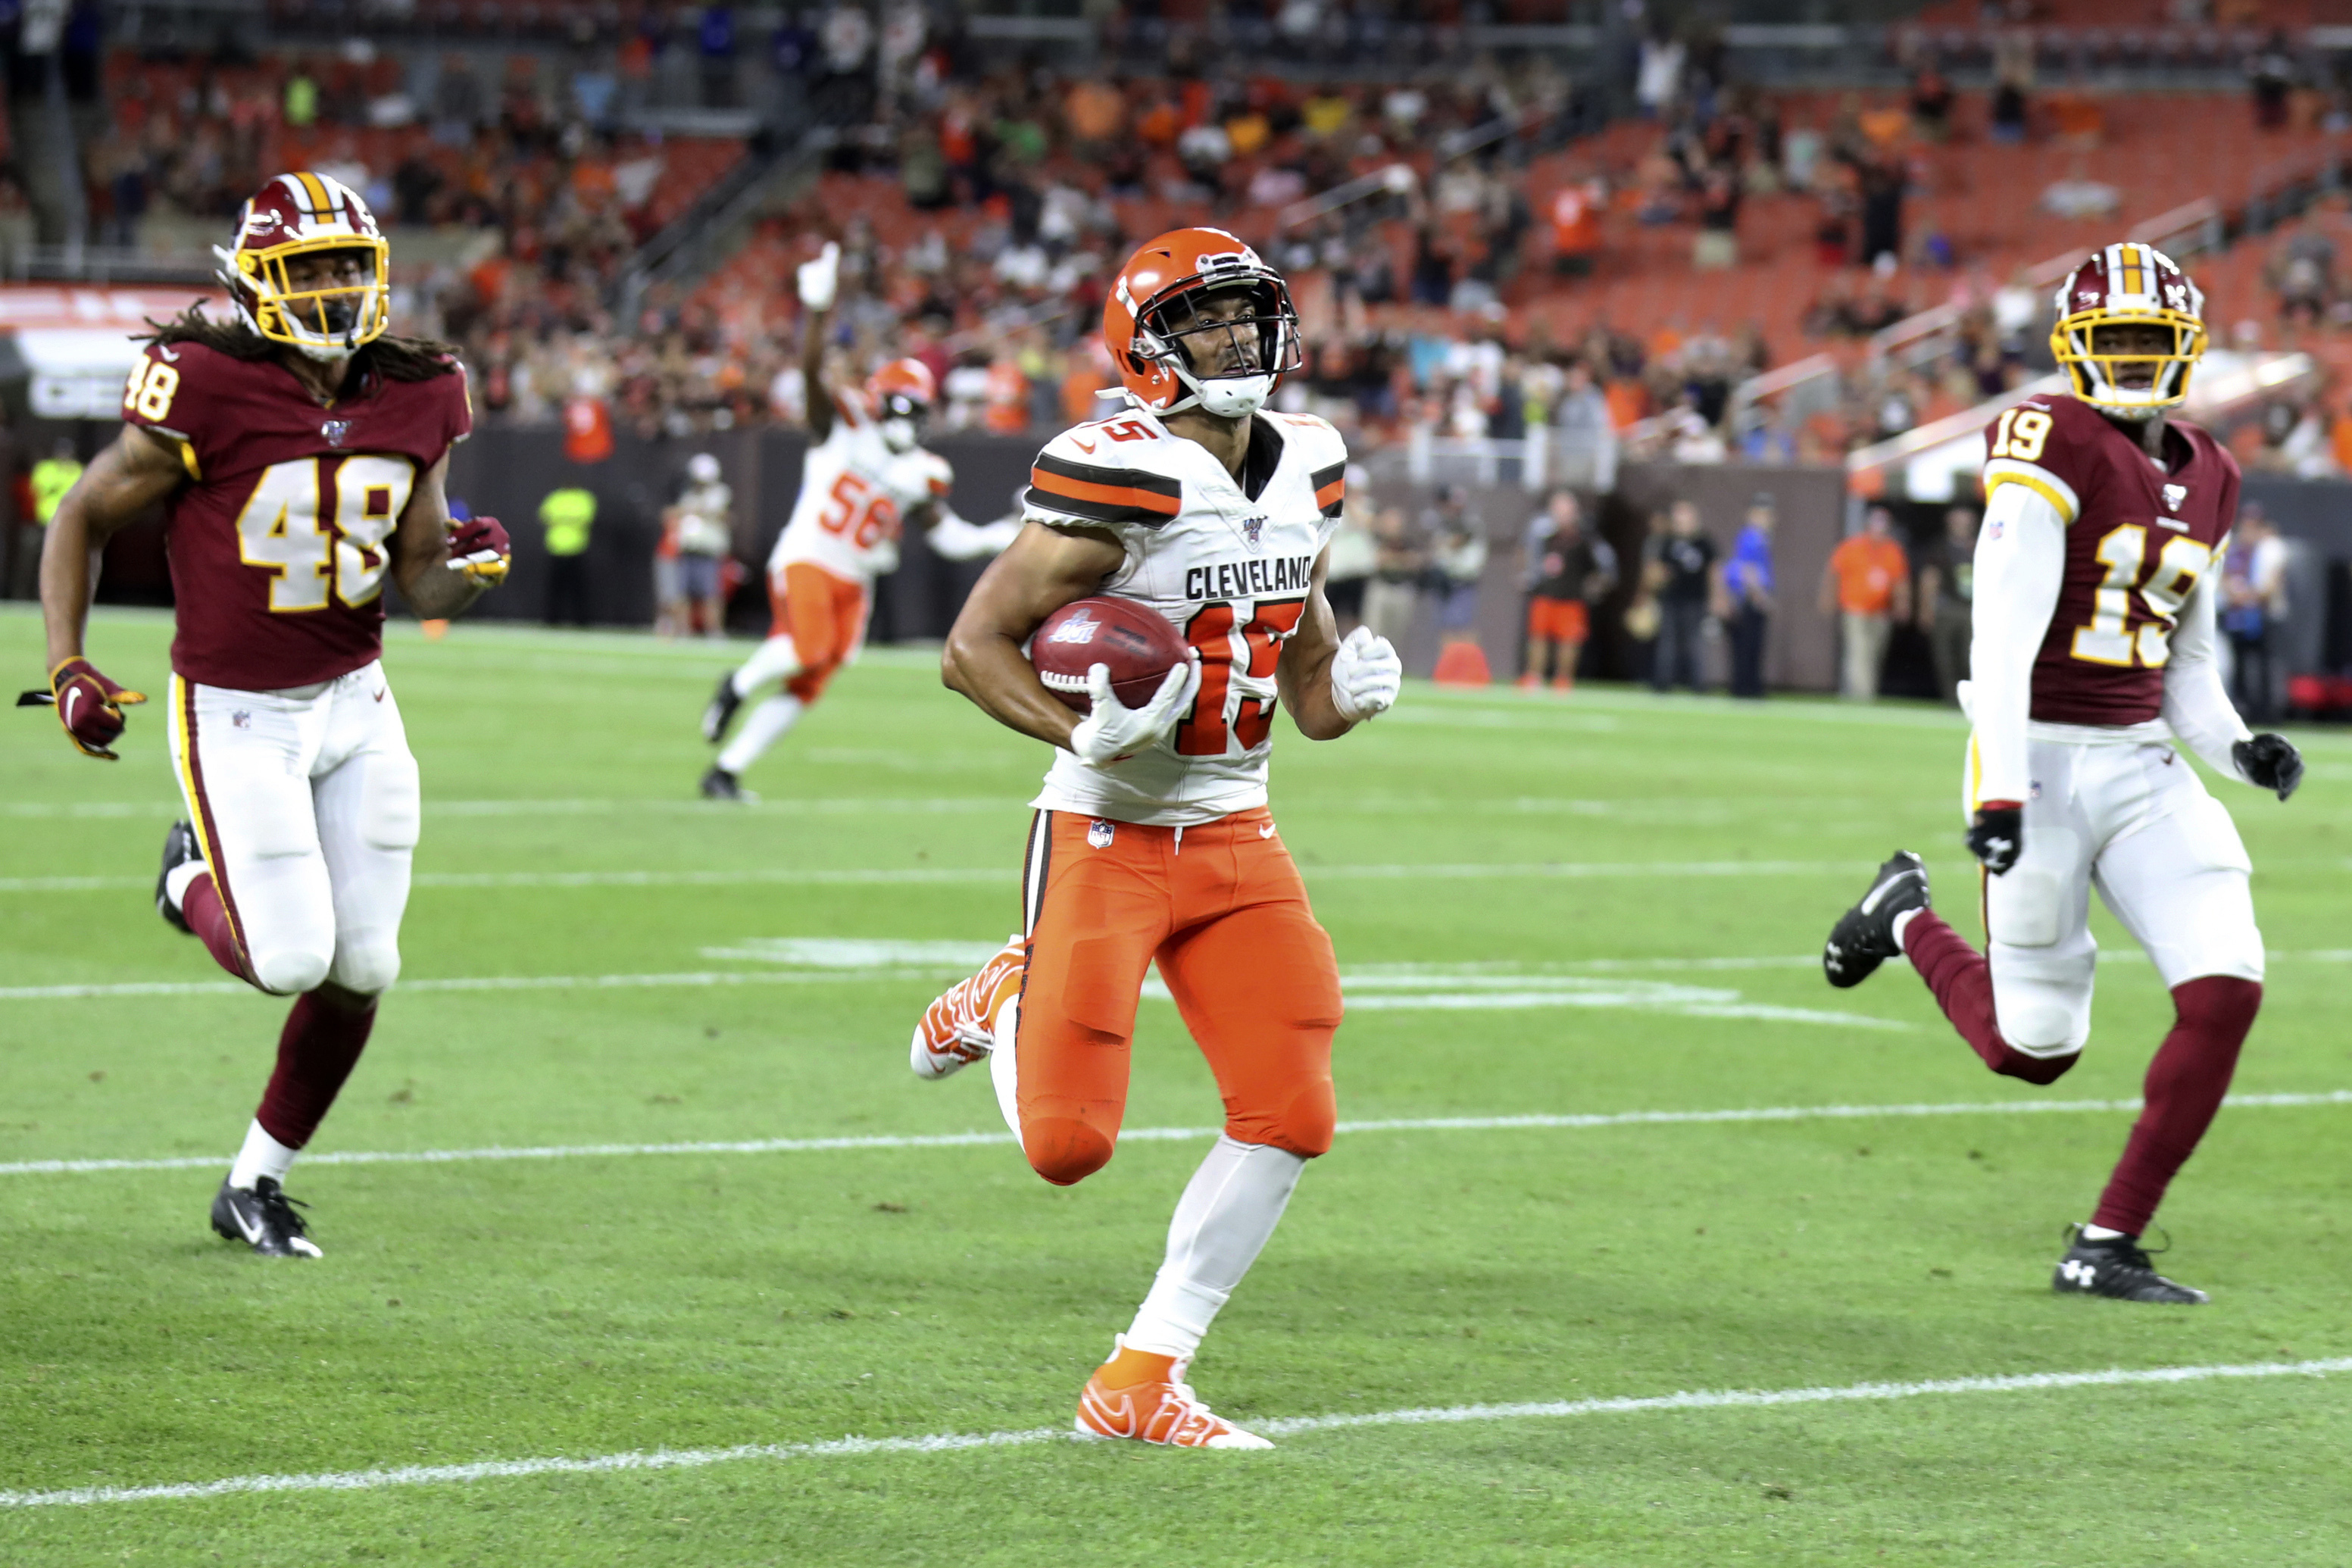 Lovable  long shot: Browns rookie returner chasing NFL dream